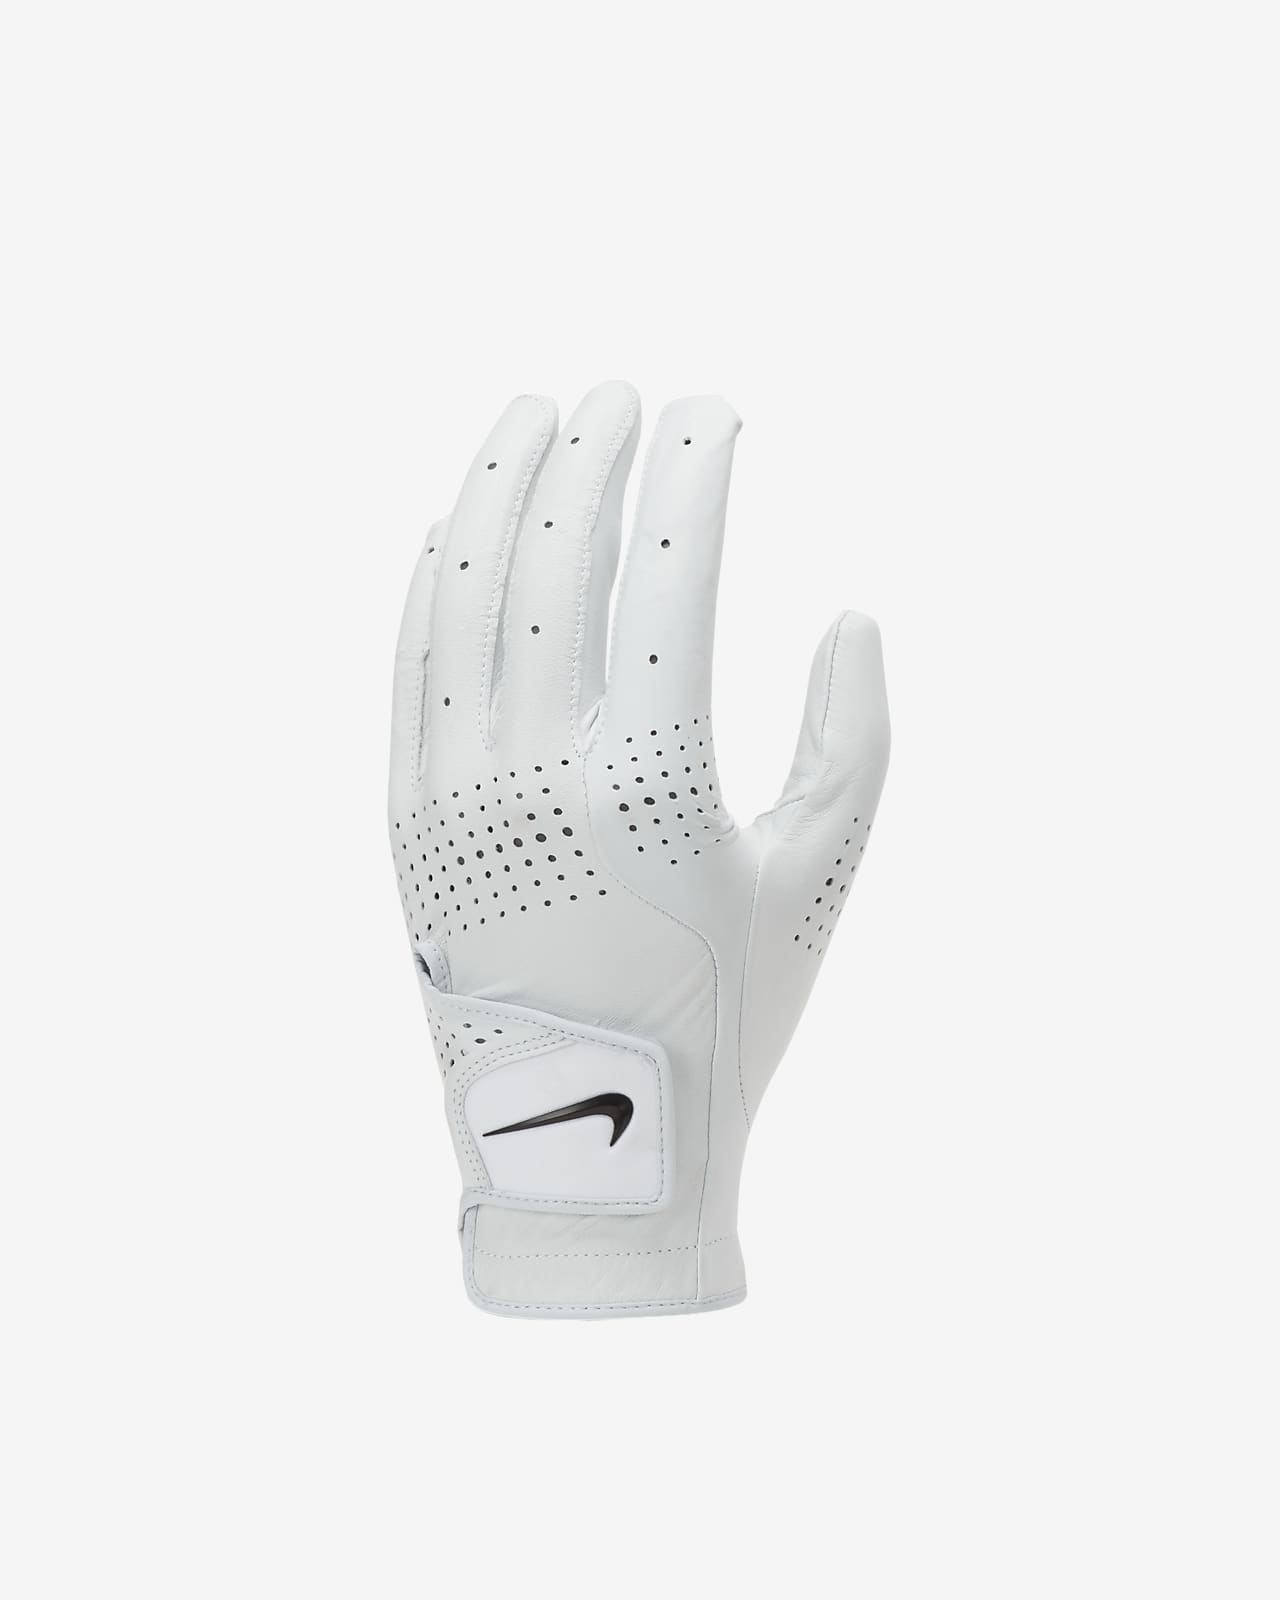 nike golf gloves for sale